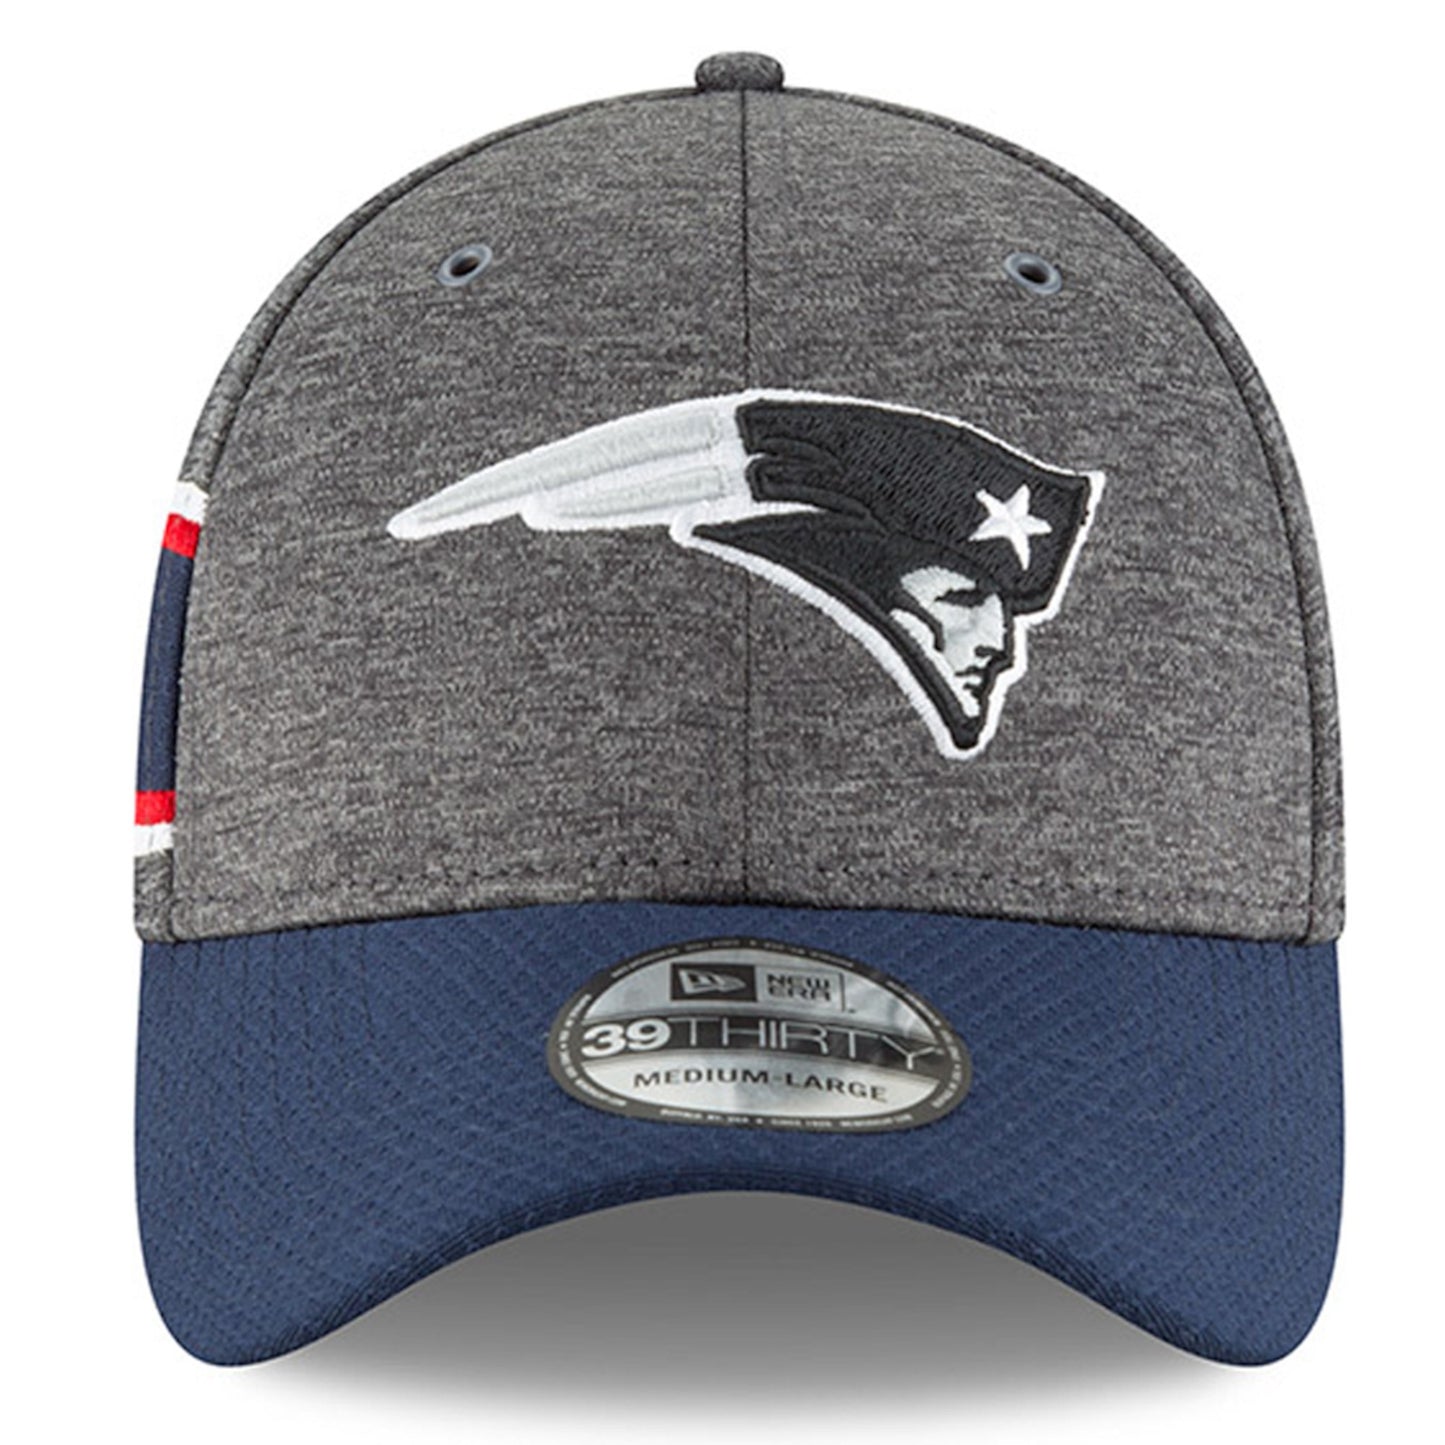 Men's New England Patriots New Era Heather Gray/Navy 2018 NFL Sideline Home Graphite 39THIRTY Flex Hat